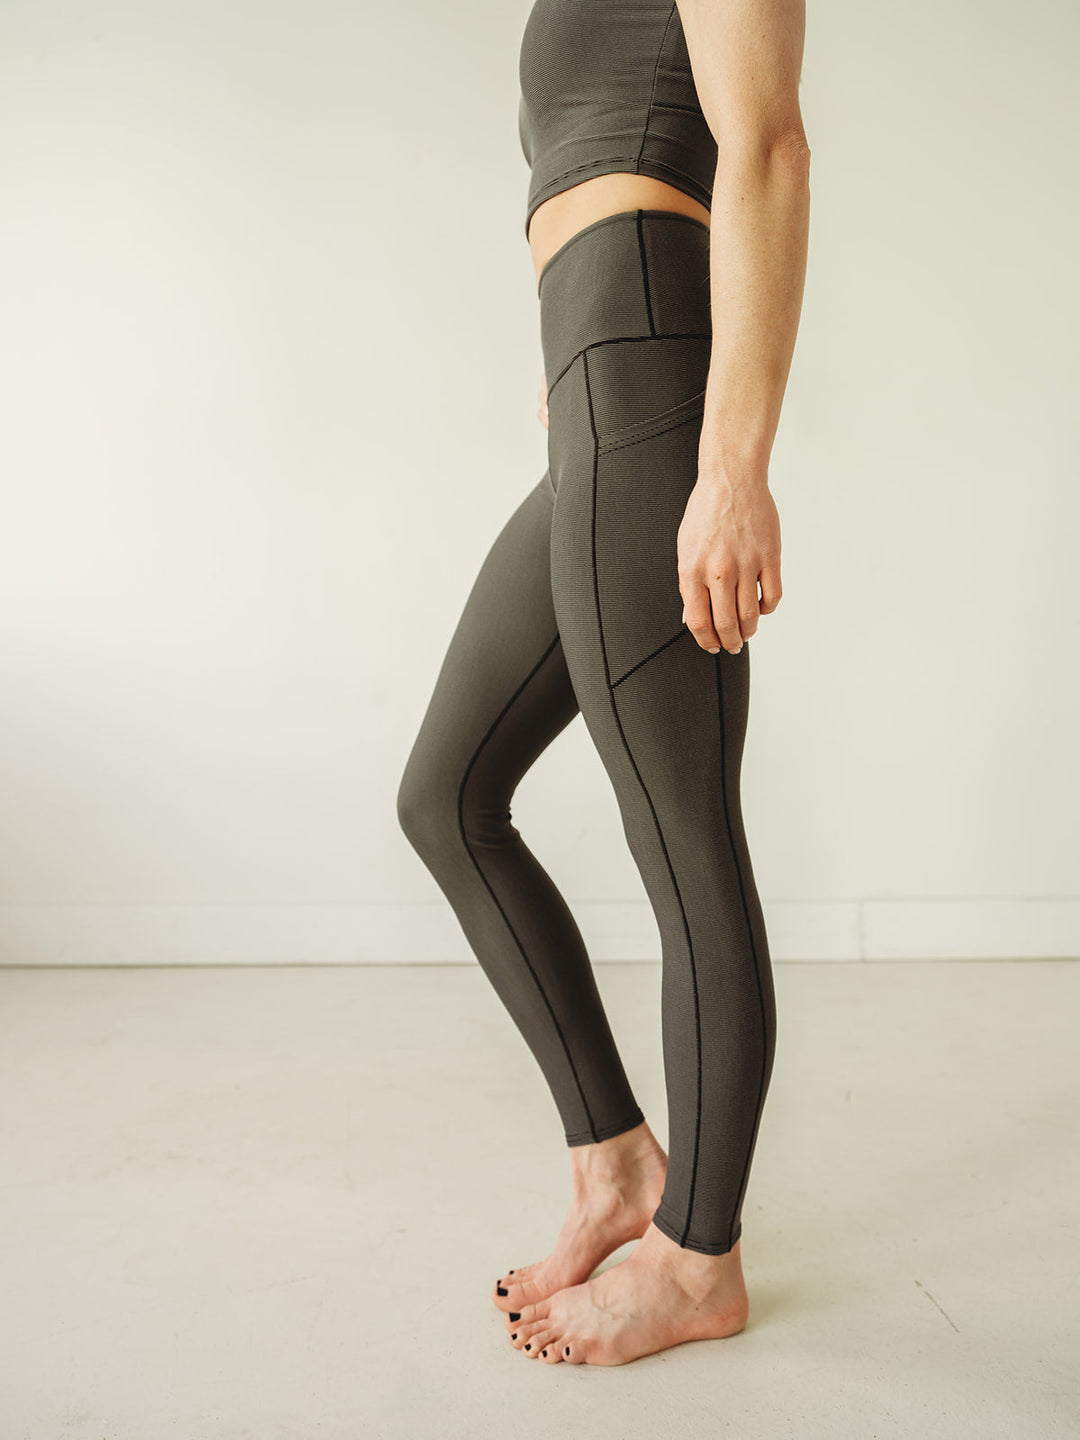 Yoga Pants | Colorado Threads | Grey Wander Pocket Yoga Pants in Microstripe